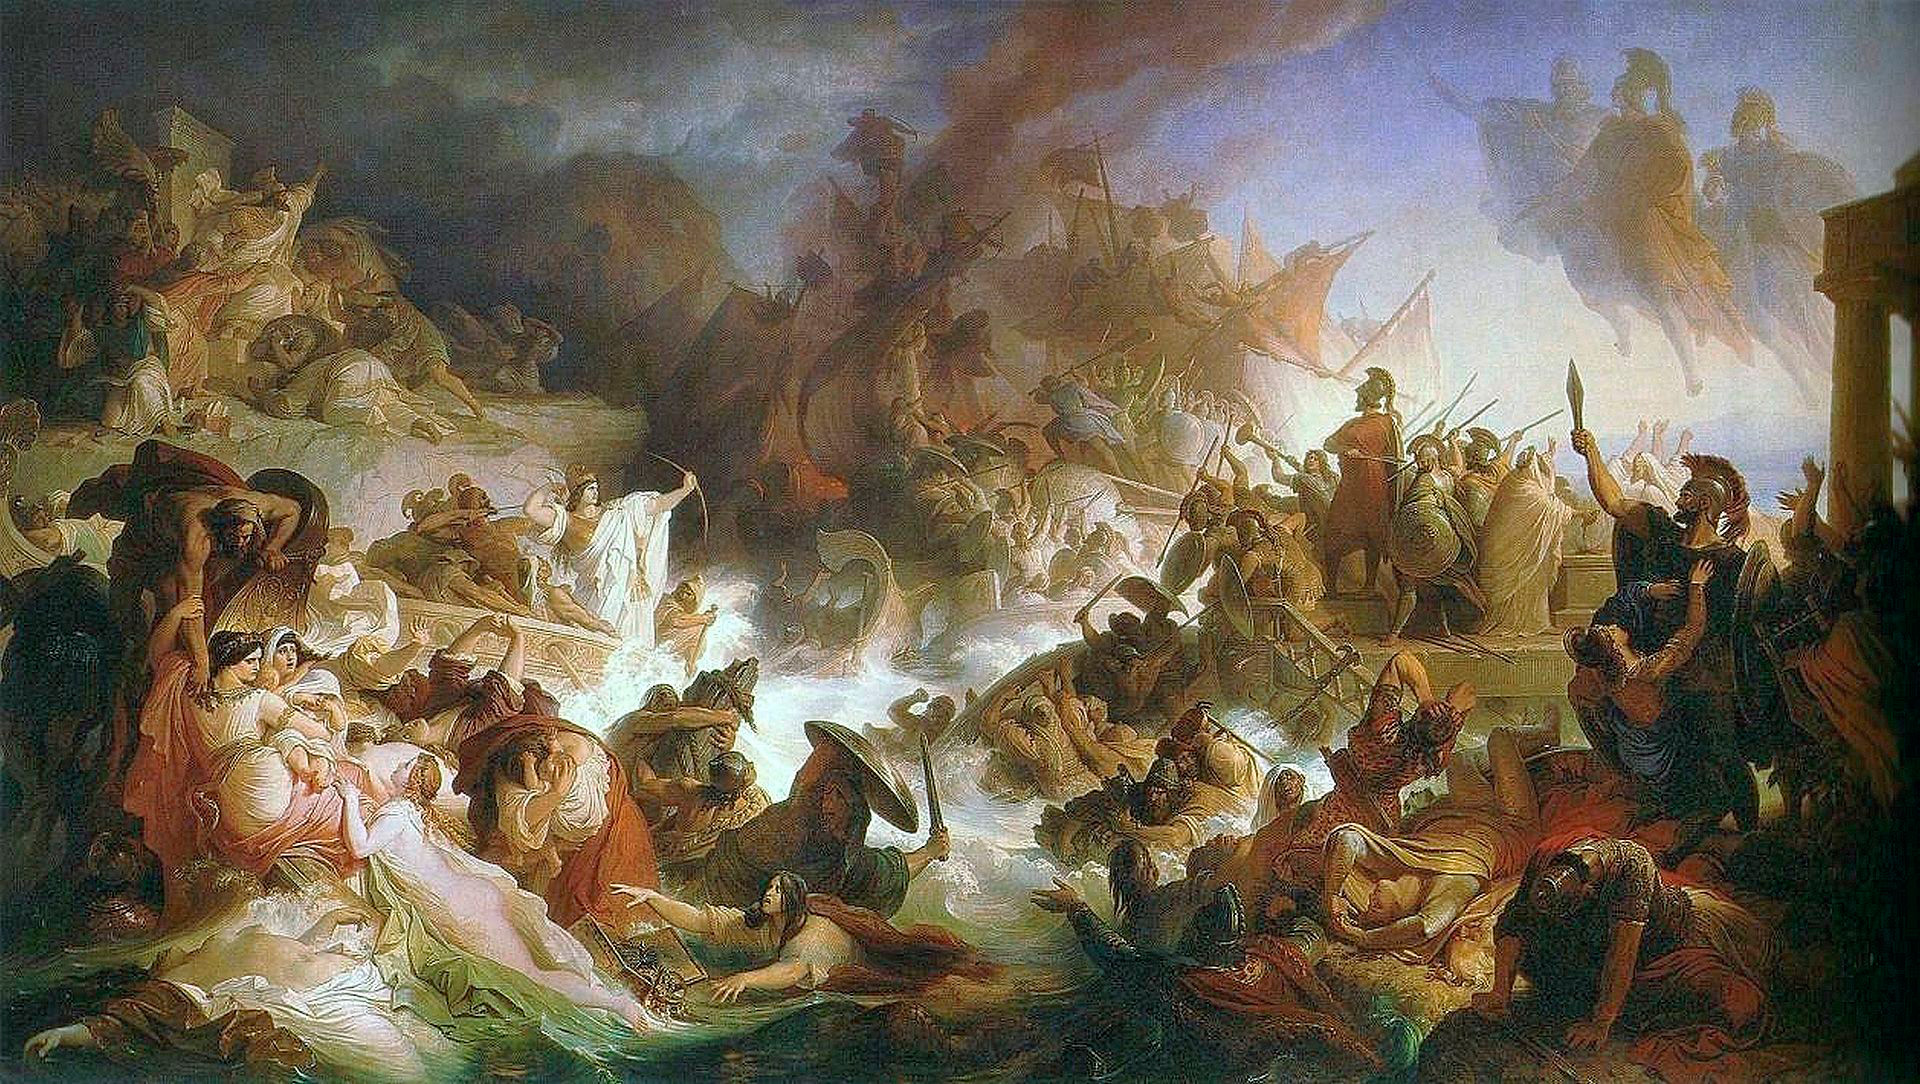 A romantic version painting of the battle by artist Wilhelm von Kaulbach